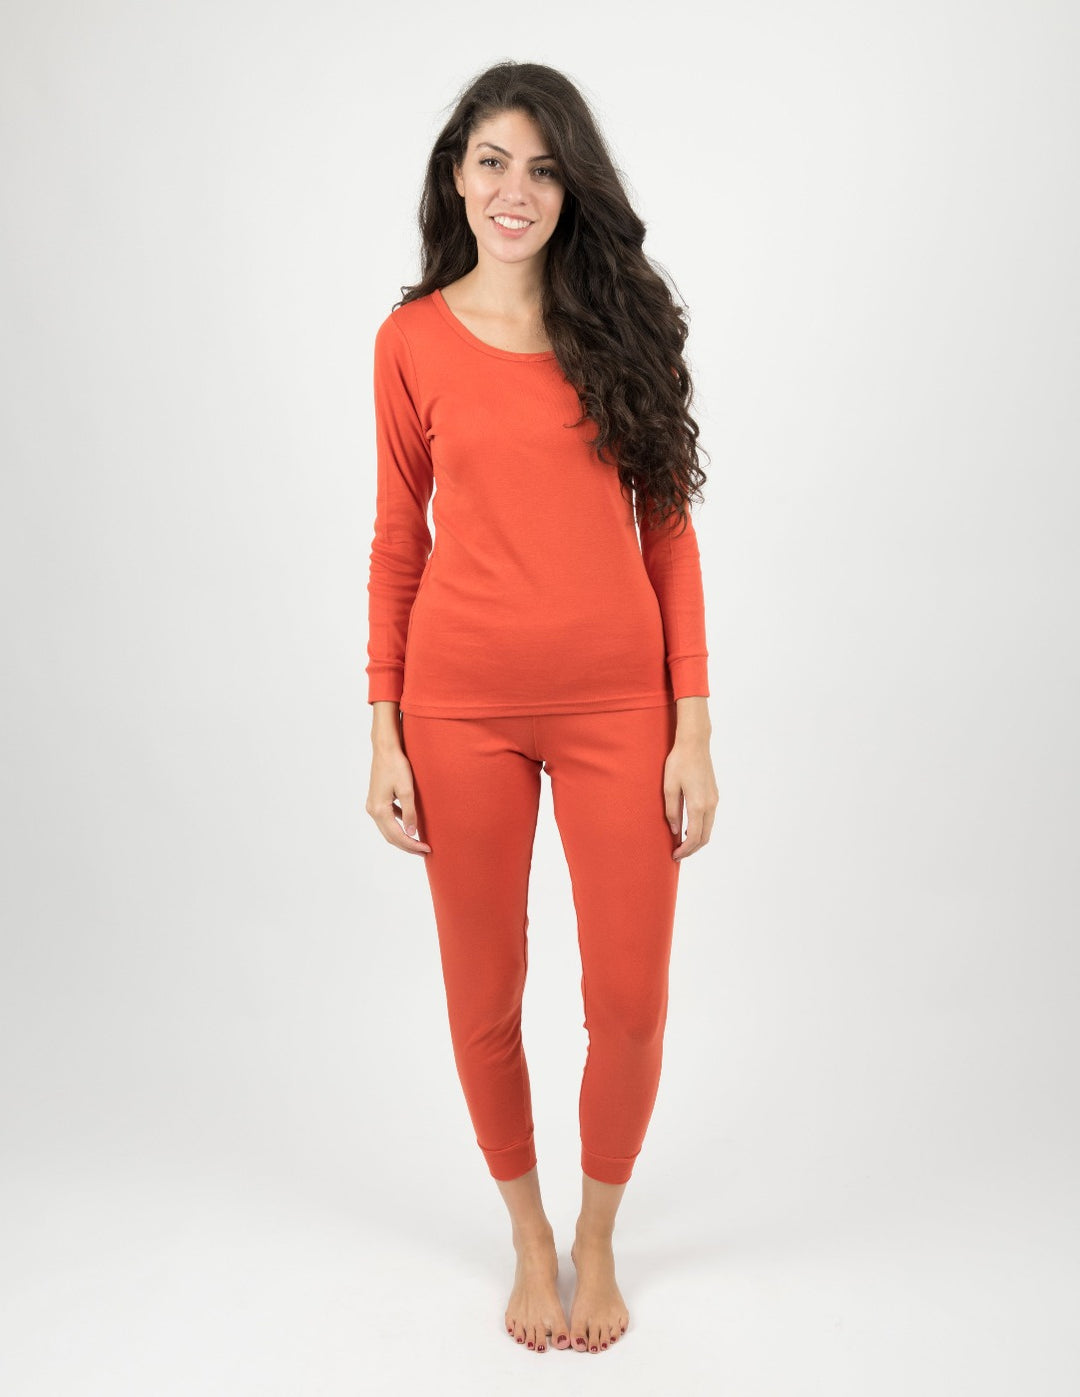 solid color orange women's cotton pajamas